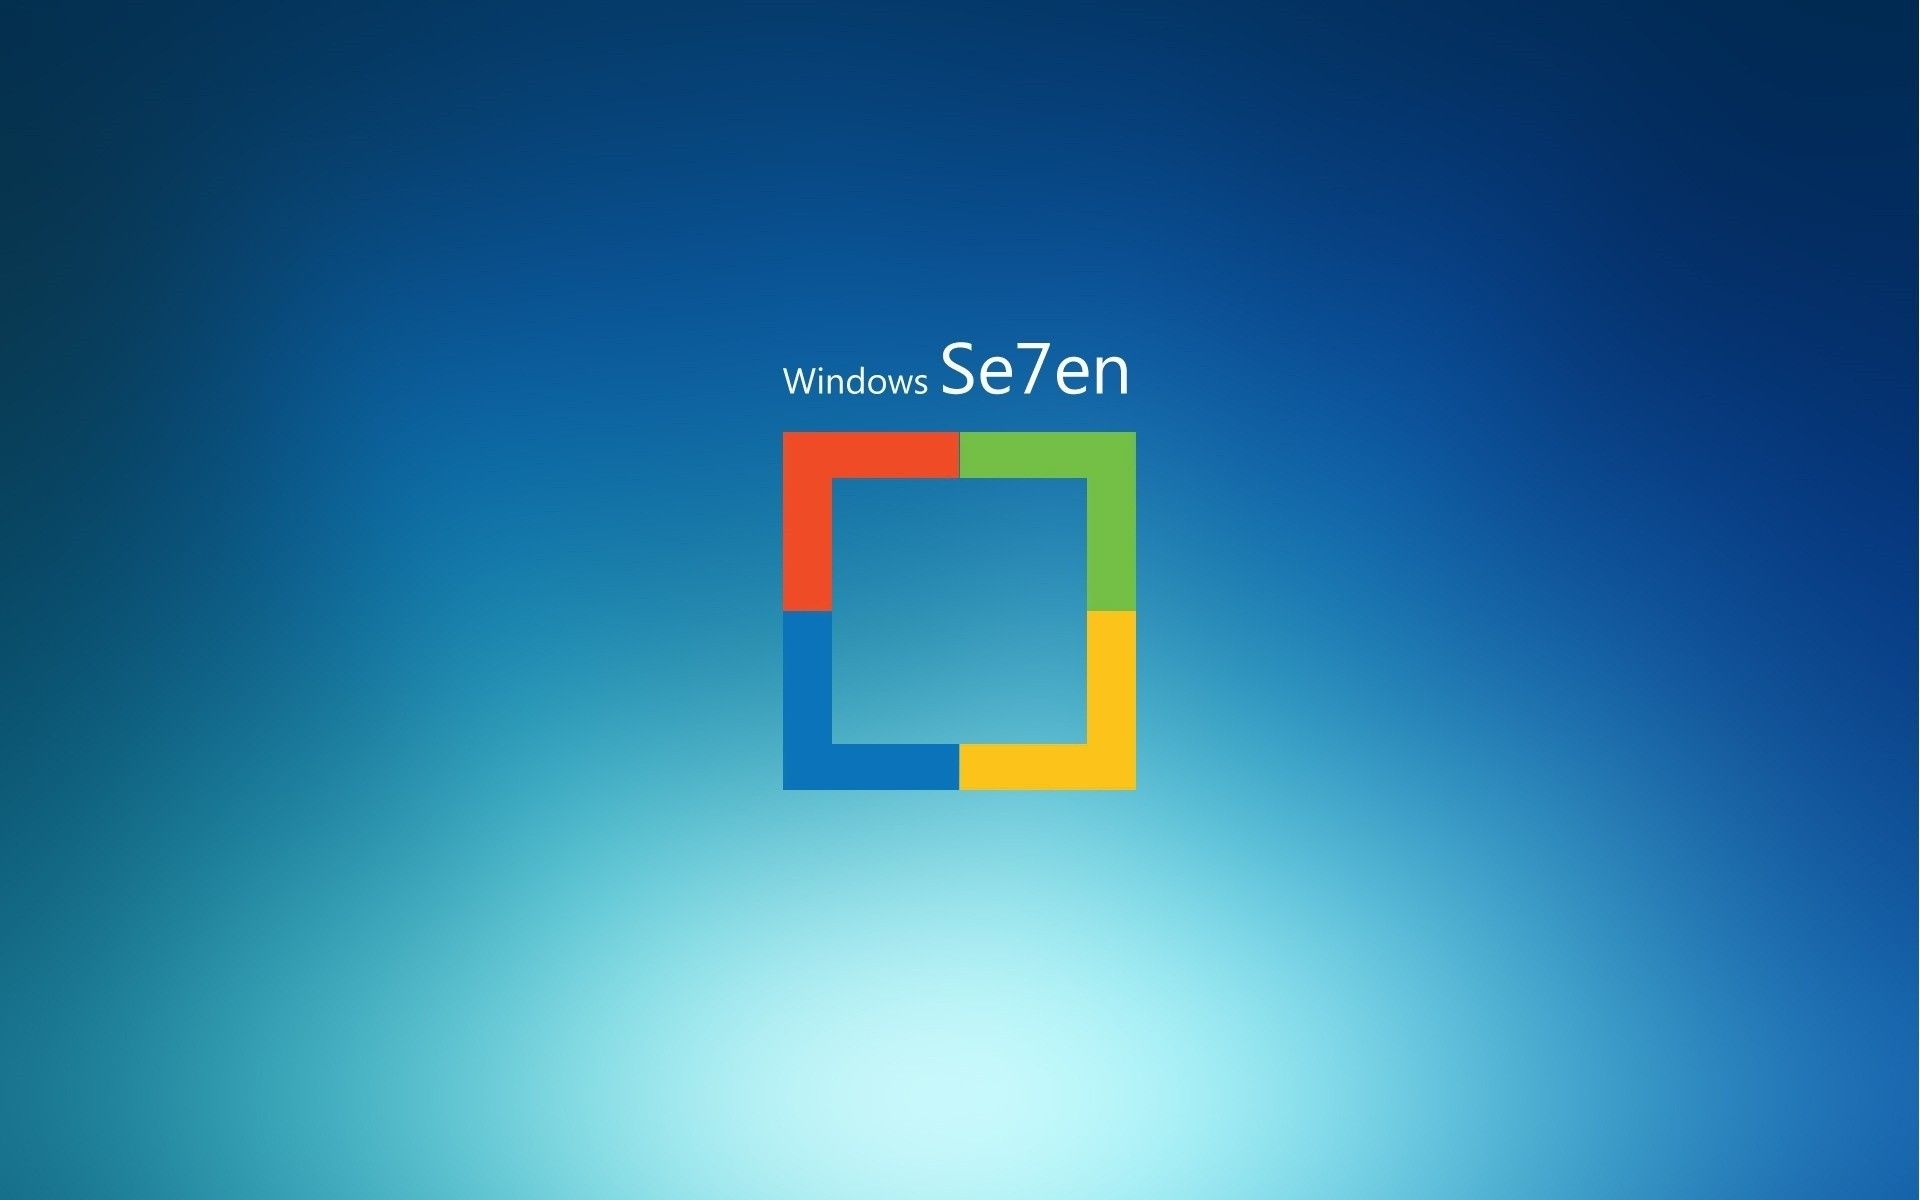 Windows Seven Image For Desktop And Wallpaper Windows7